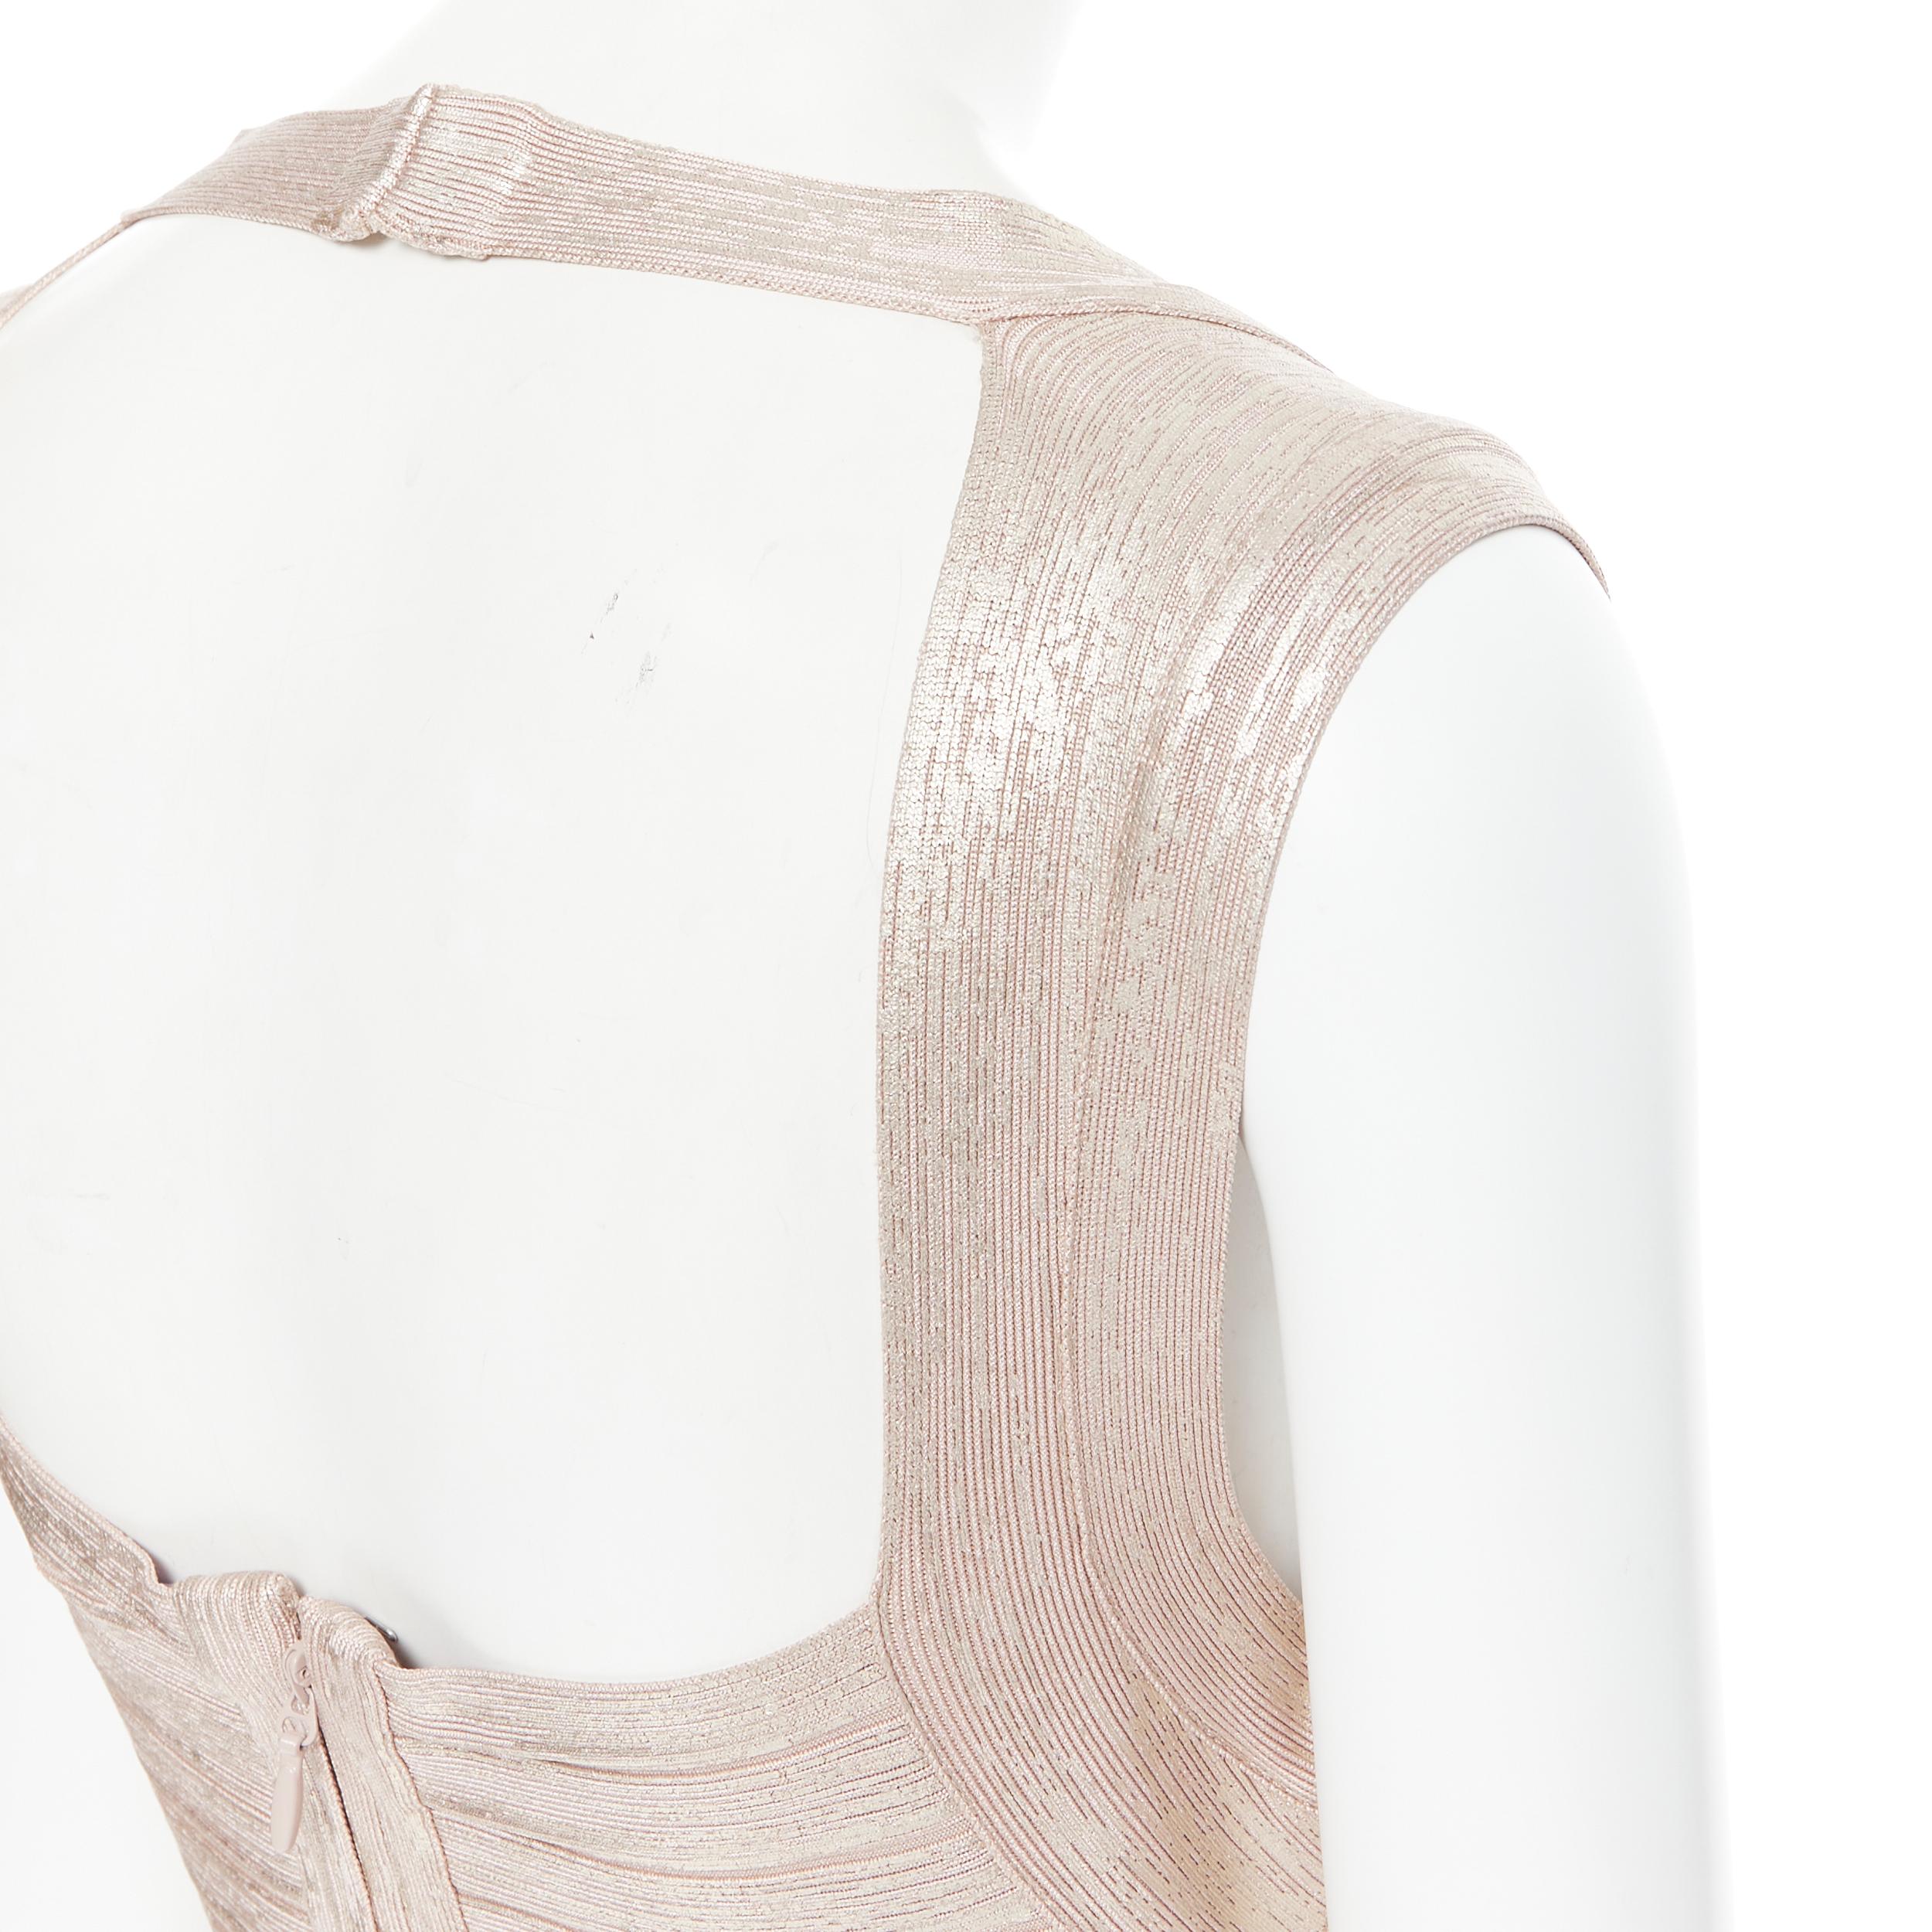 HERVE LEGER Max Azria rose gold shimmer bandage bodycon stretch dress M 1